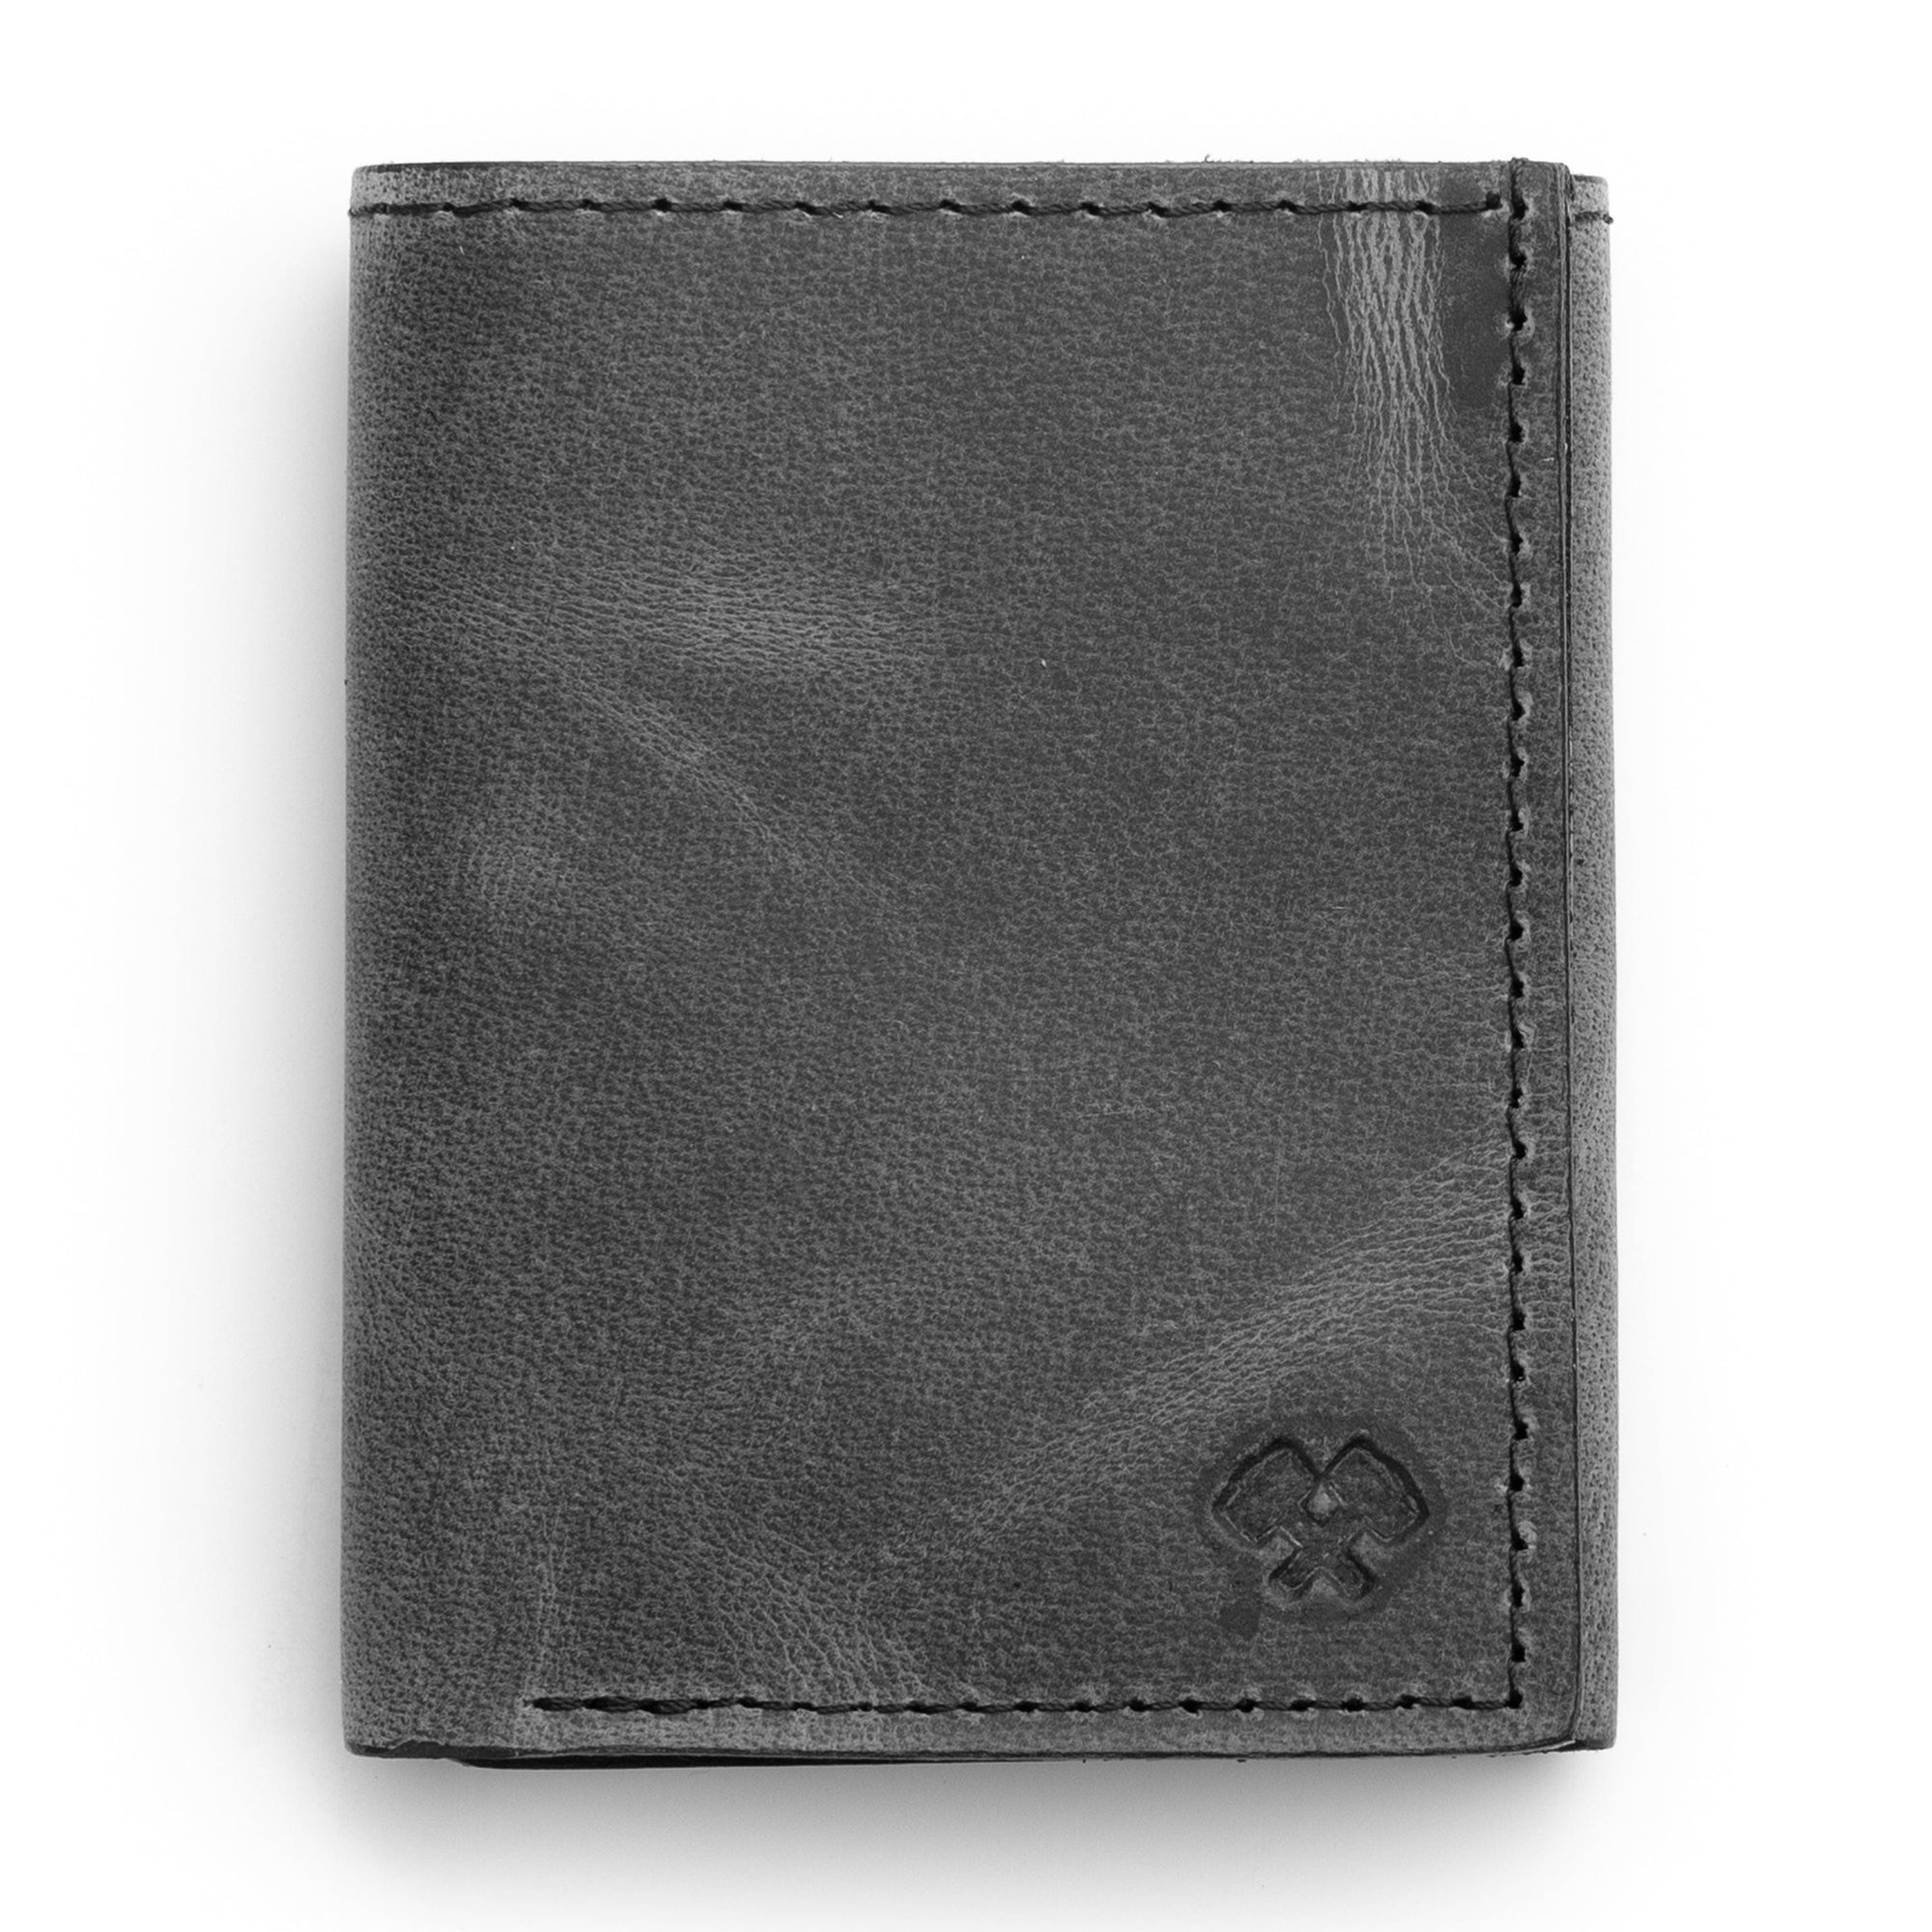 100% Genuine Leather Men's Wallet RFID Blocking Trifold Zipper Purse | eBay